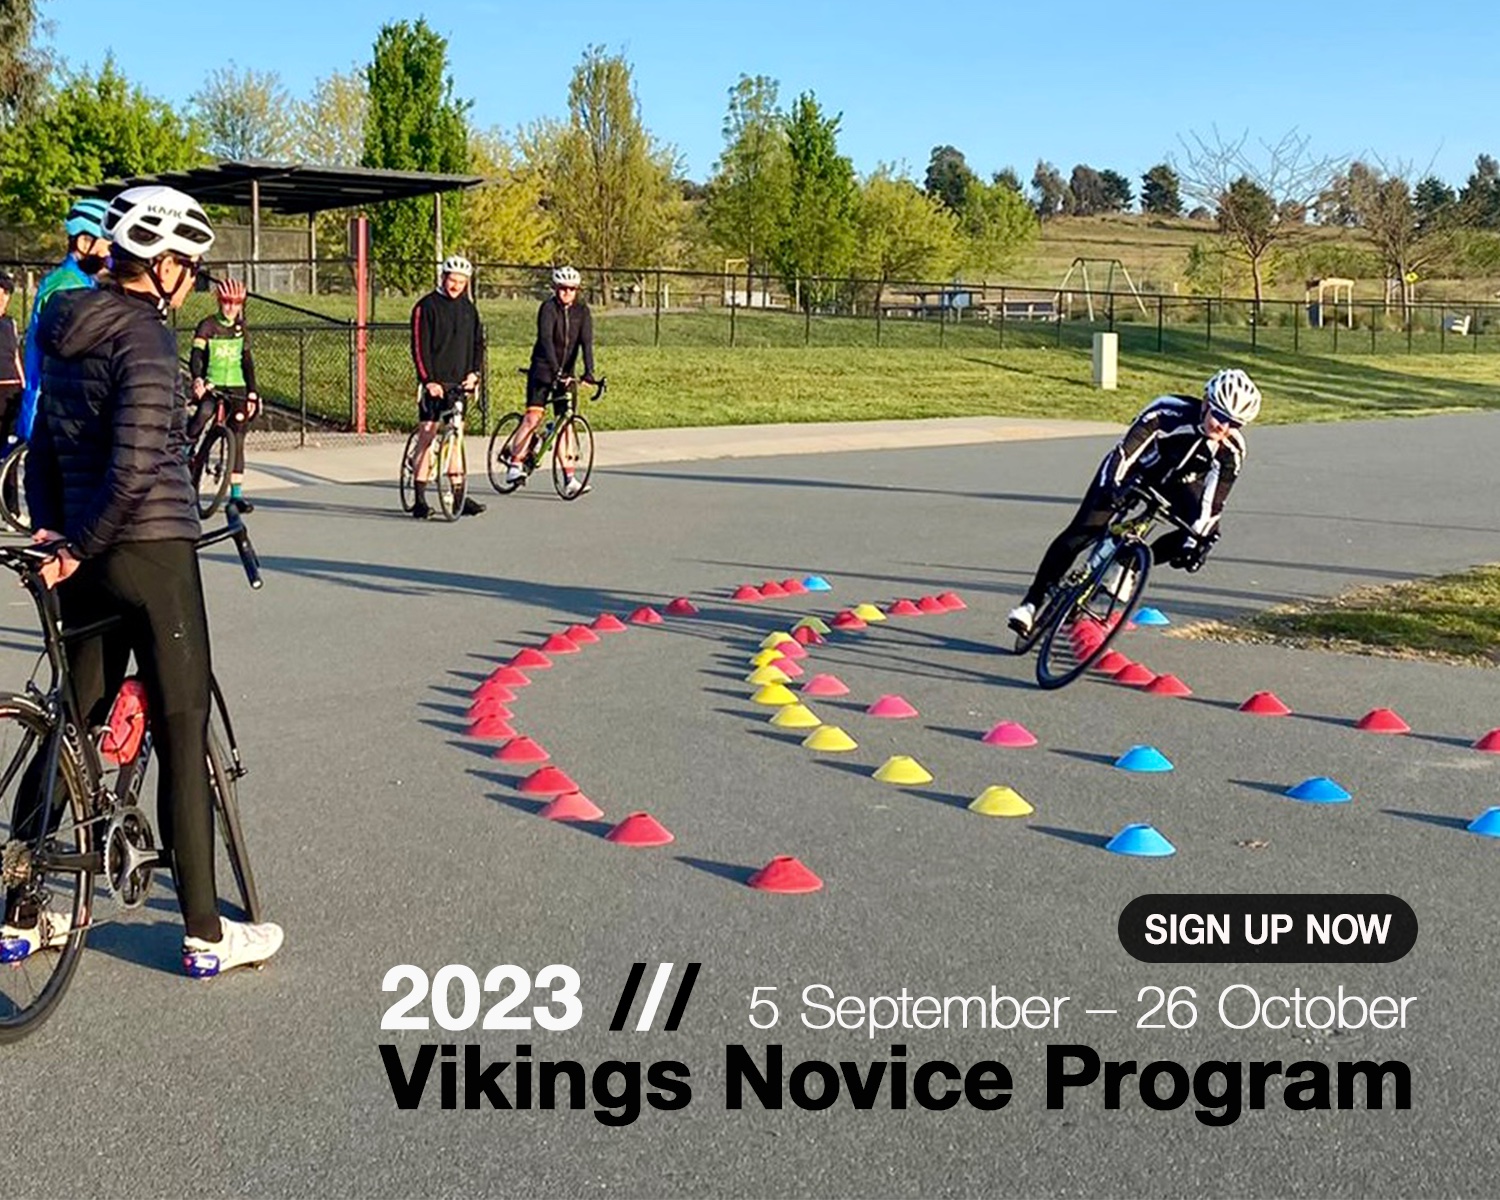 Entries now open for the Vikings Novice Program